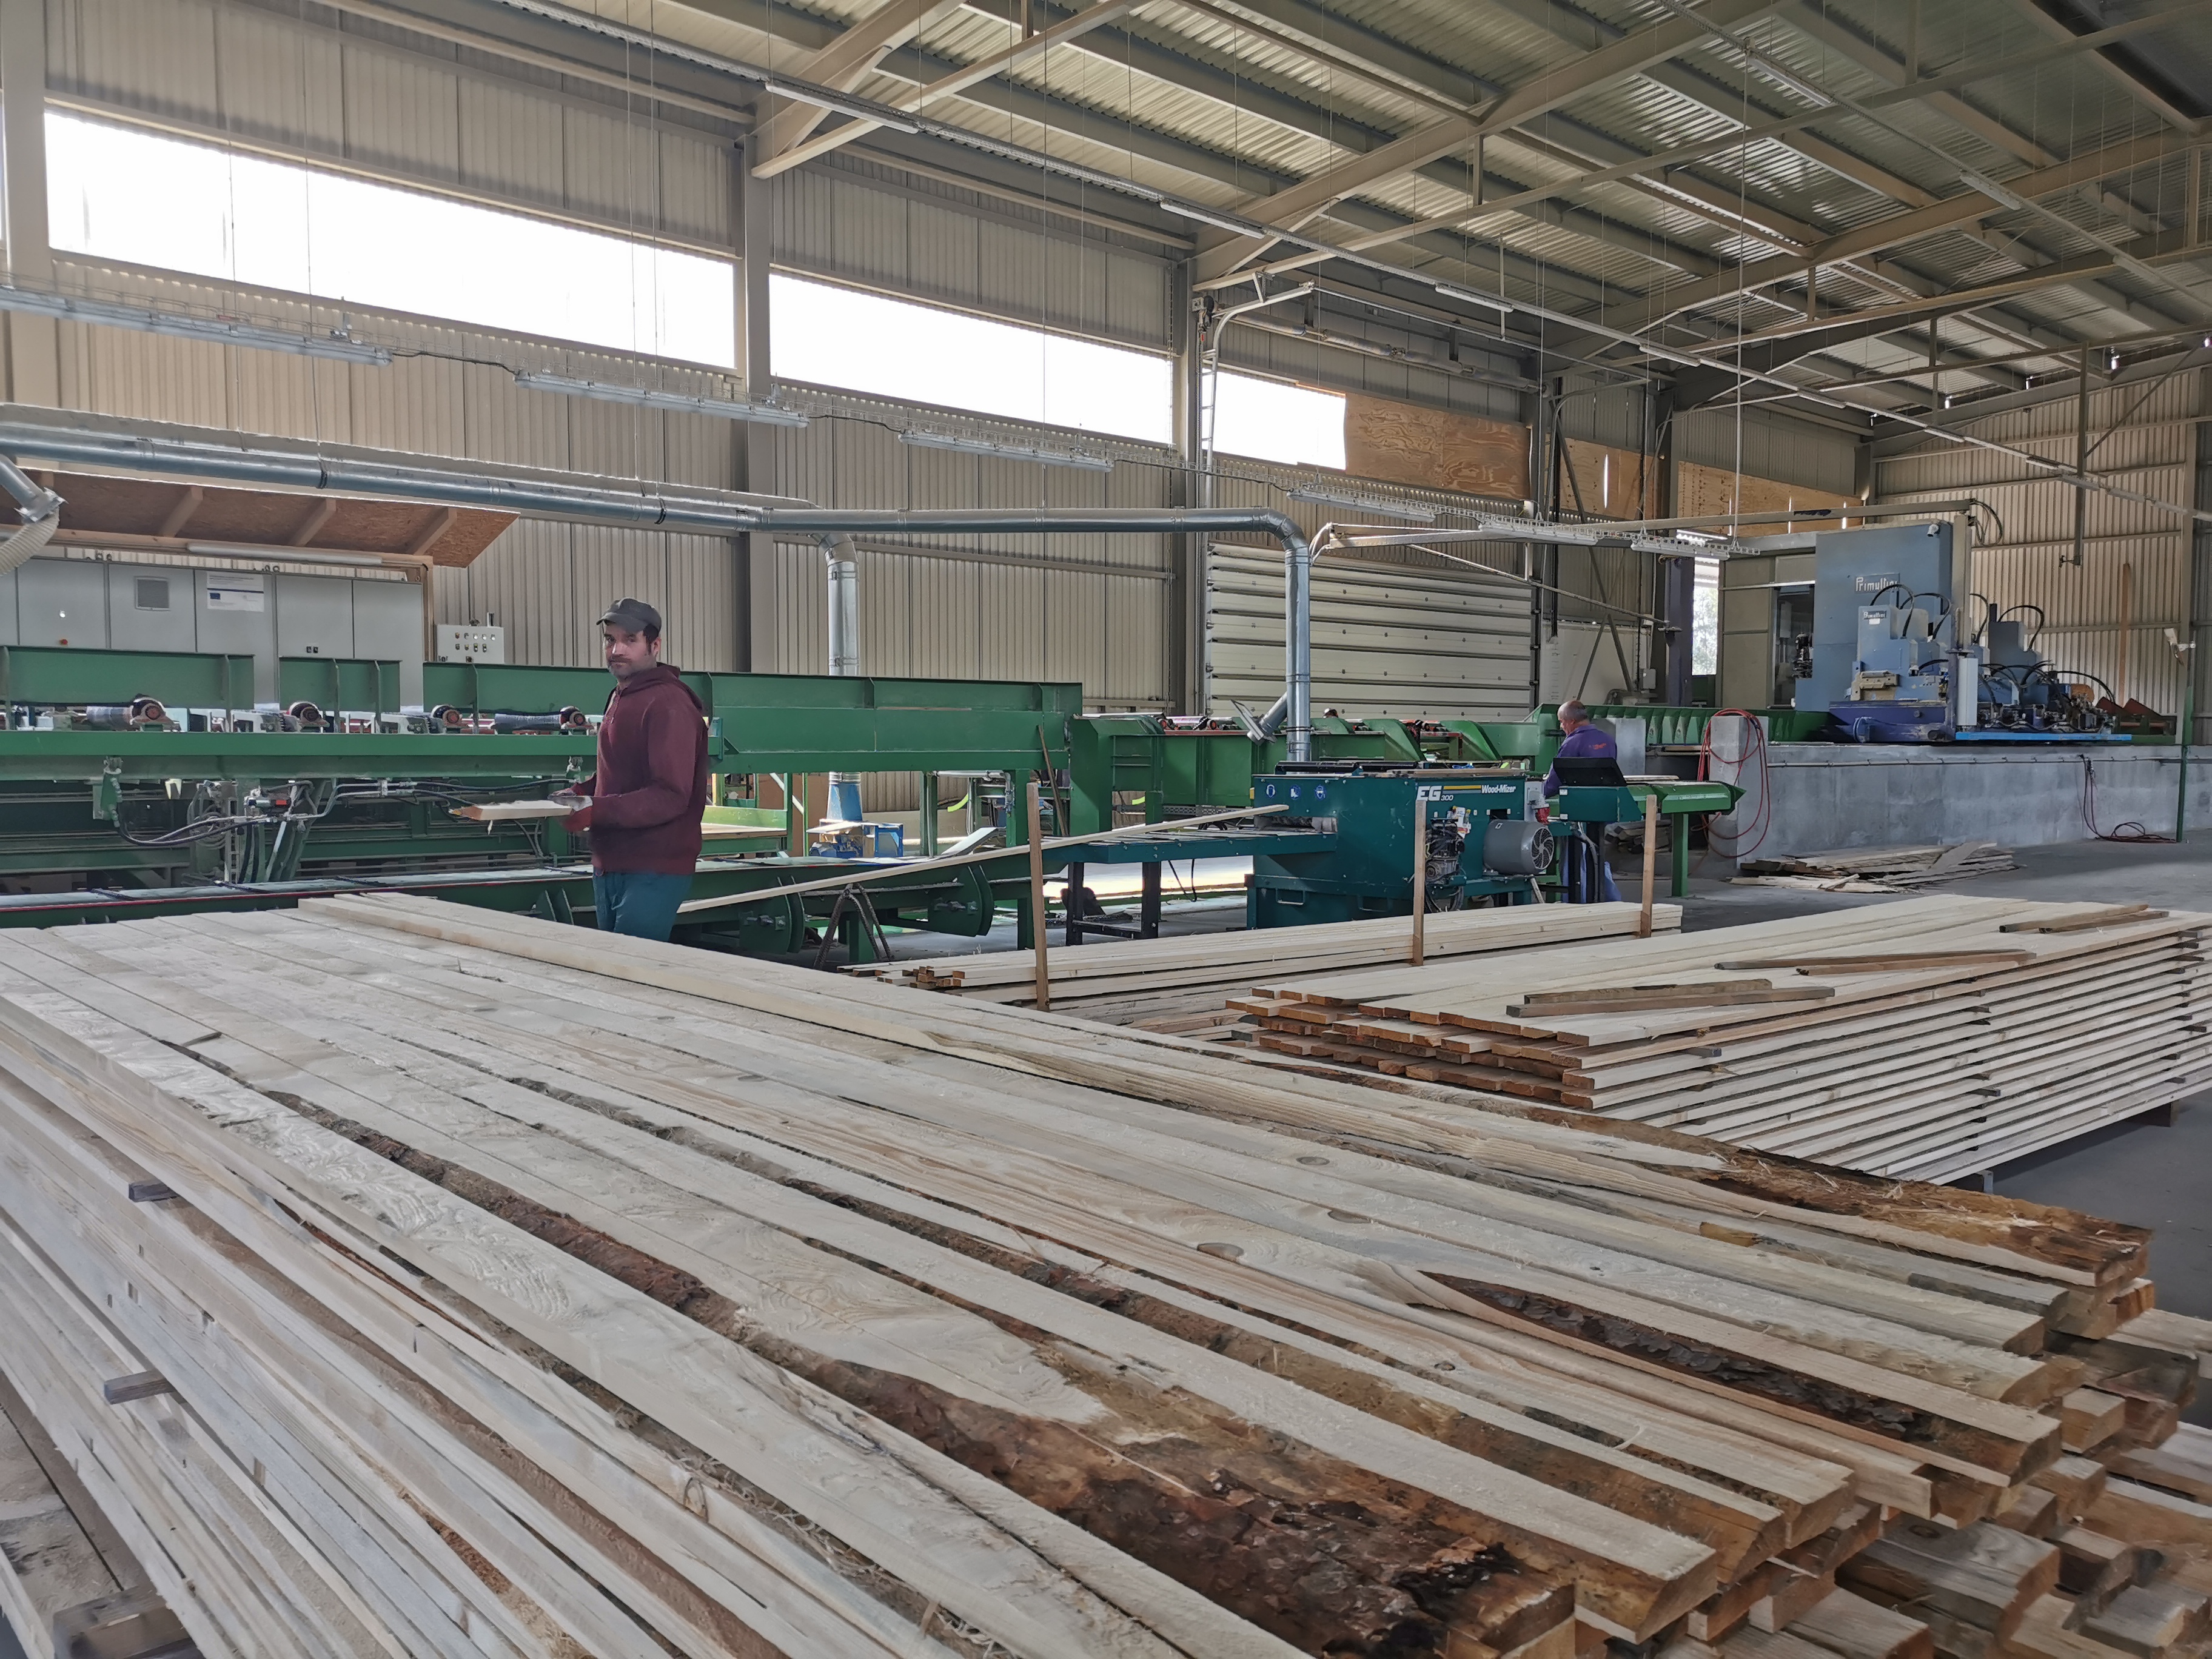 Packing of sawn timber